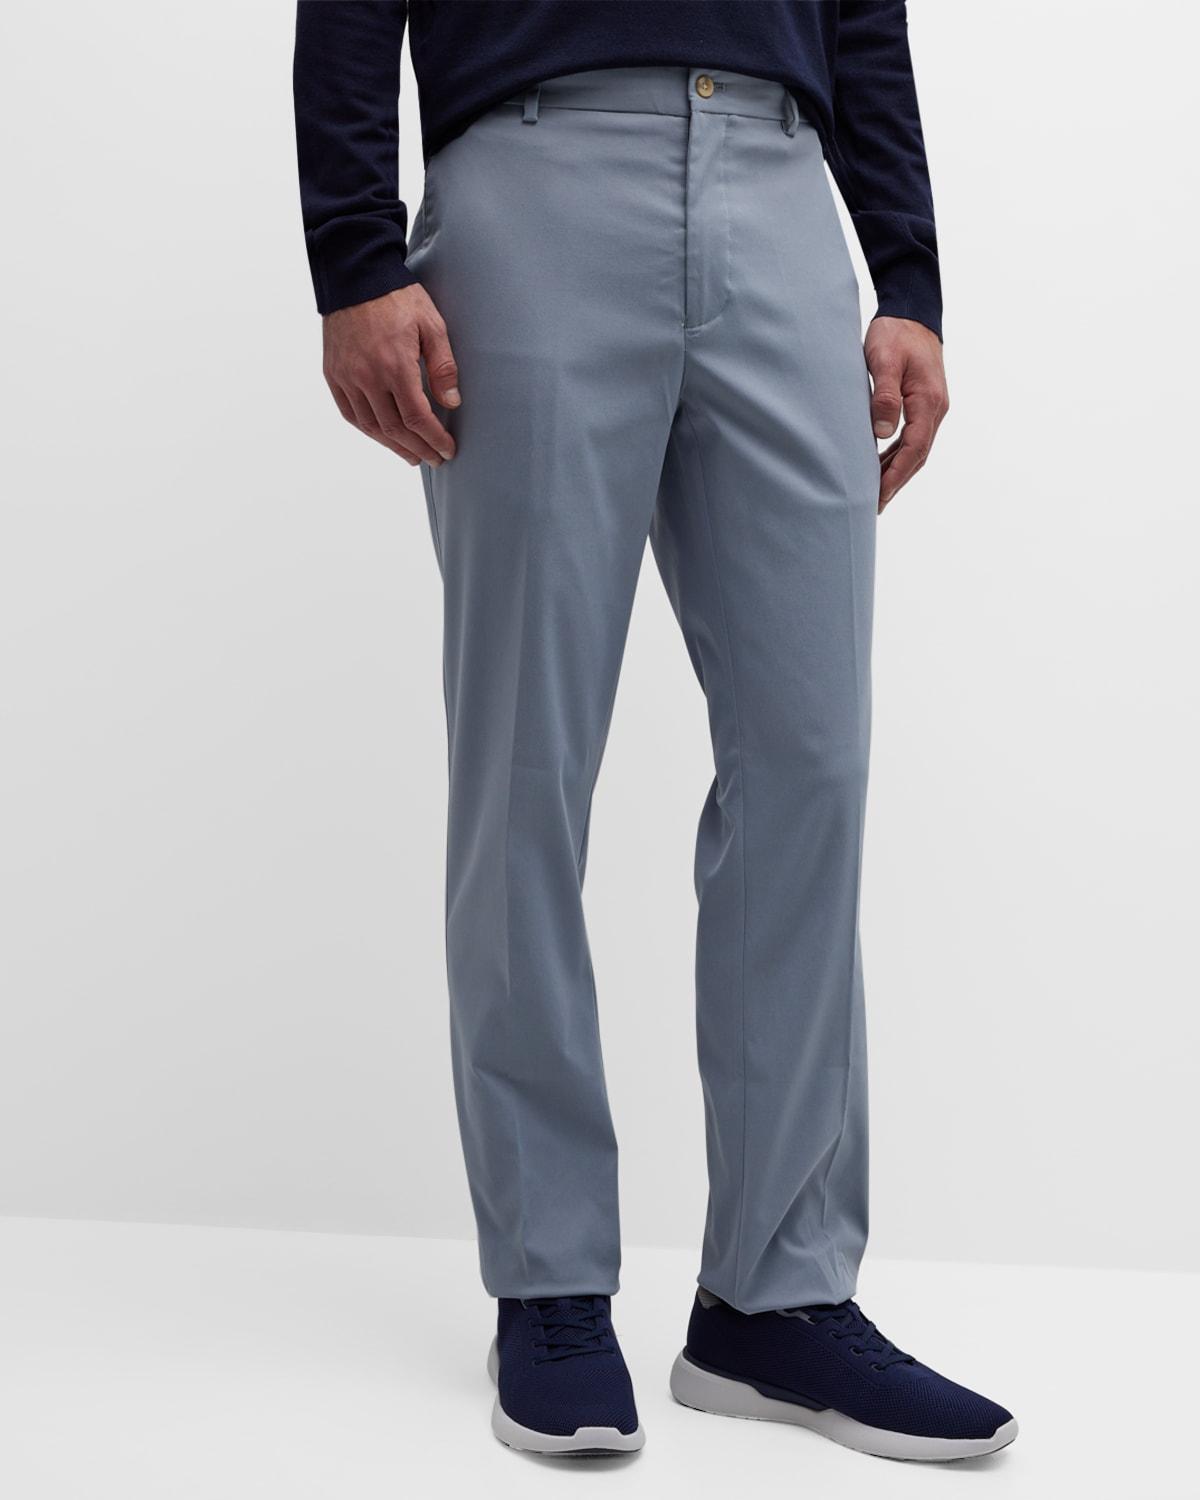 Peter Millar Raleigh Performance Trouser Pants in Blue for Men